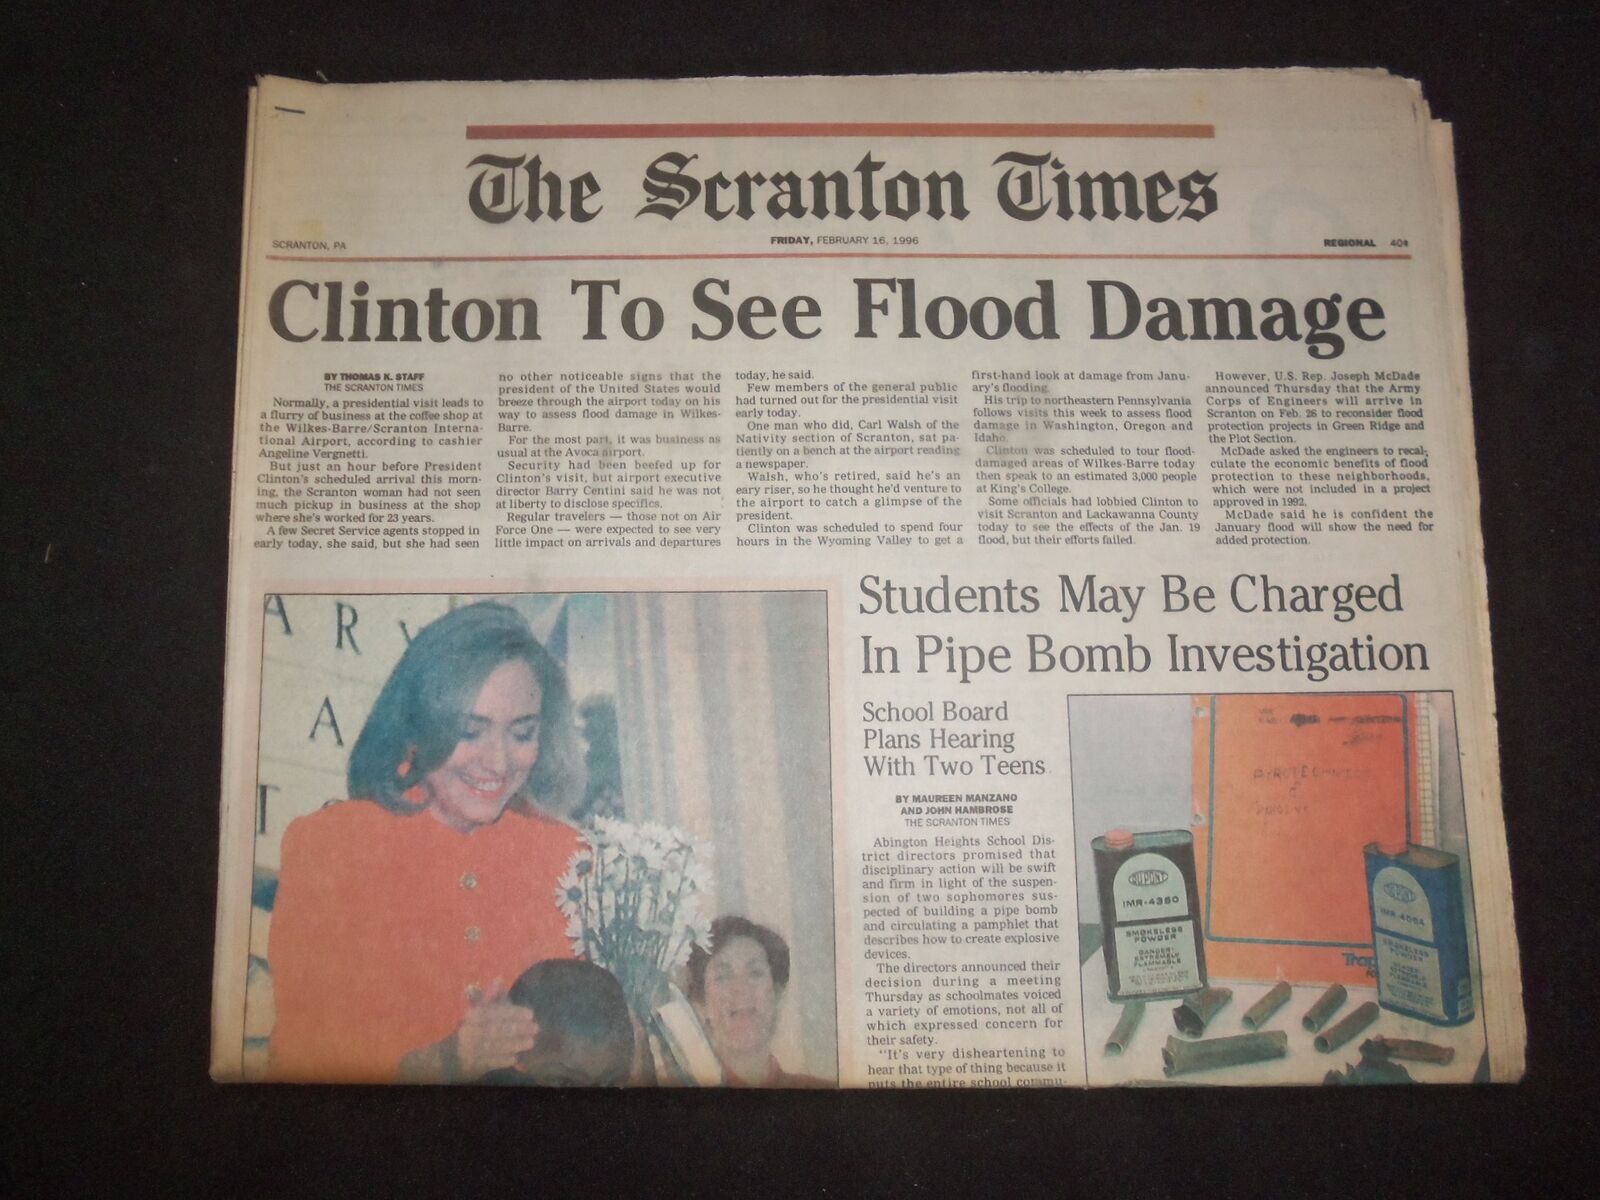 1996 FEB 16 THE SCRANTON TIMES NEWSPAPER - CLINTON TO SEE FLOOD DAMAGE - NP 8362